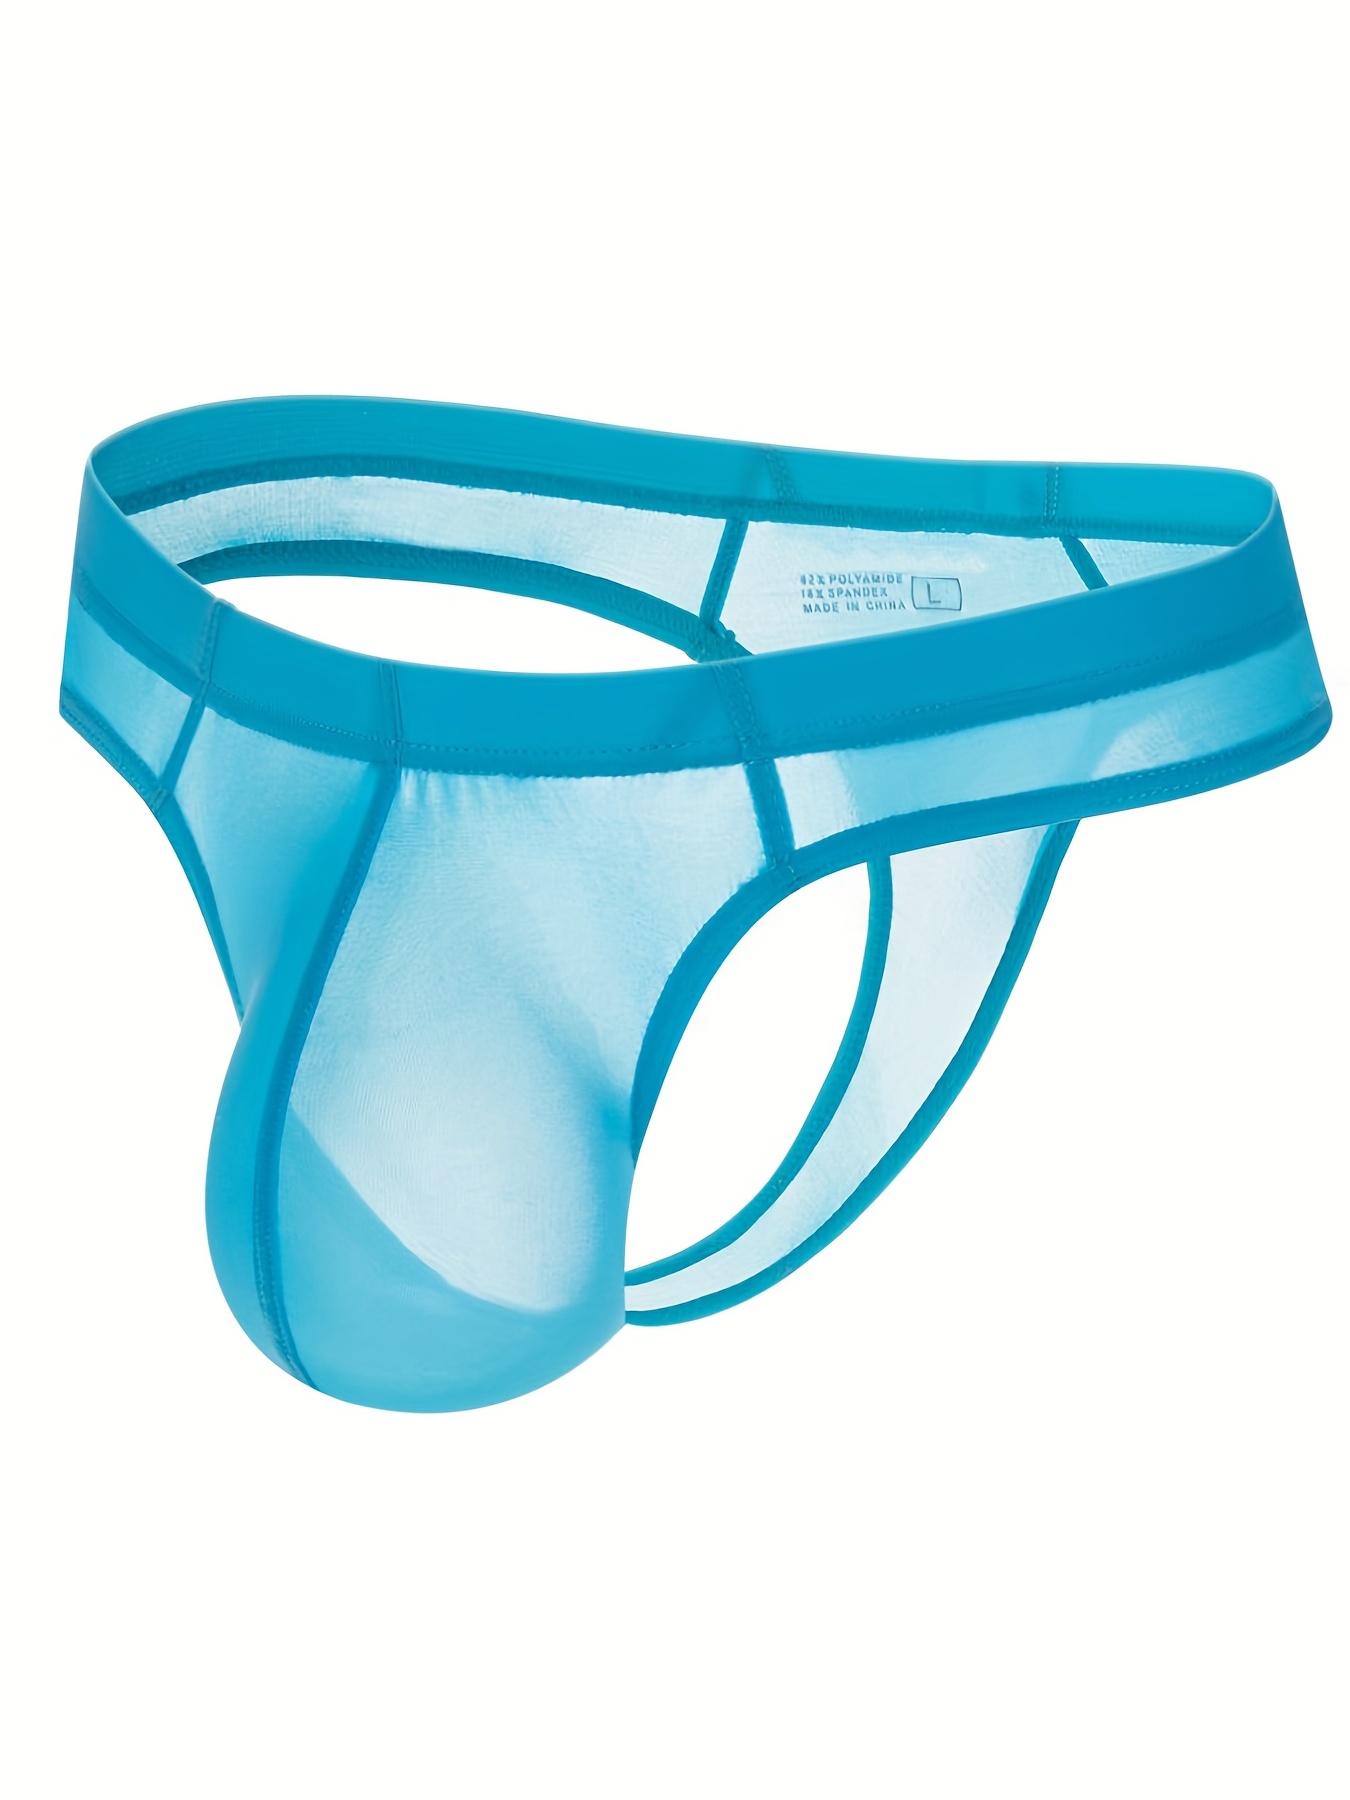 Men's C-String Bulge Pouch Lingerie T Back Bikini Briefs Bottoms Underwear